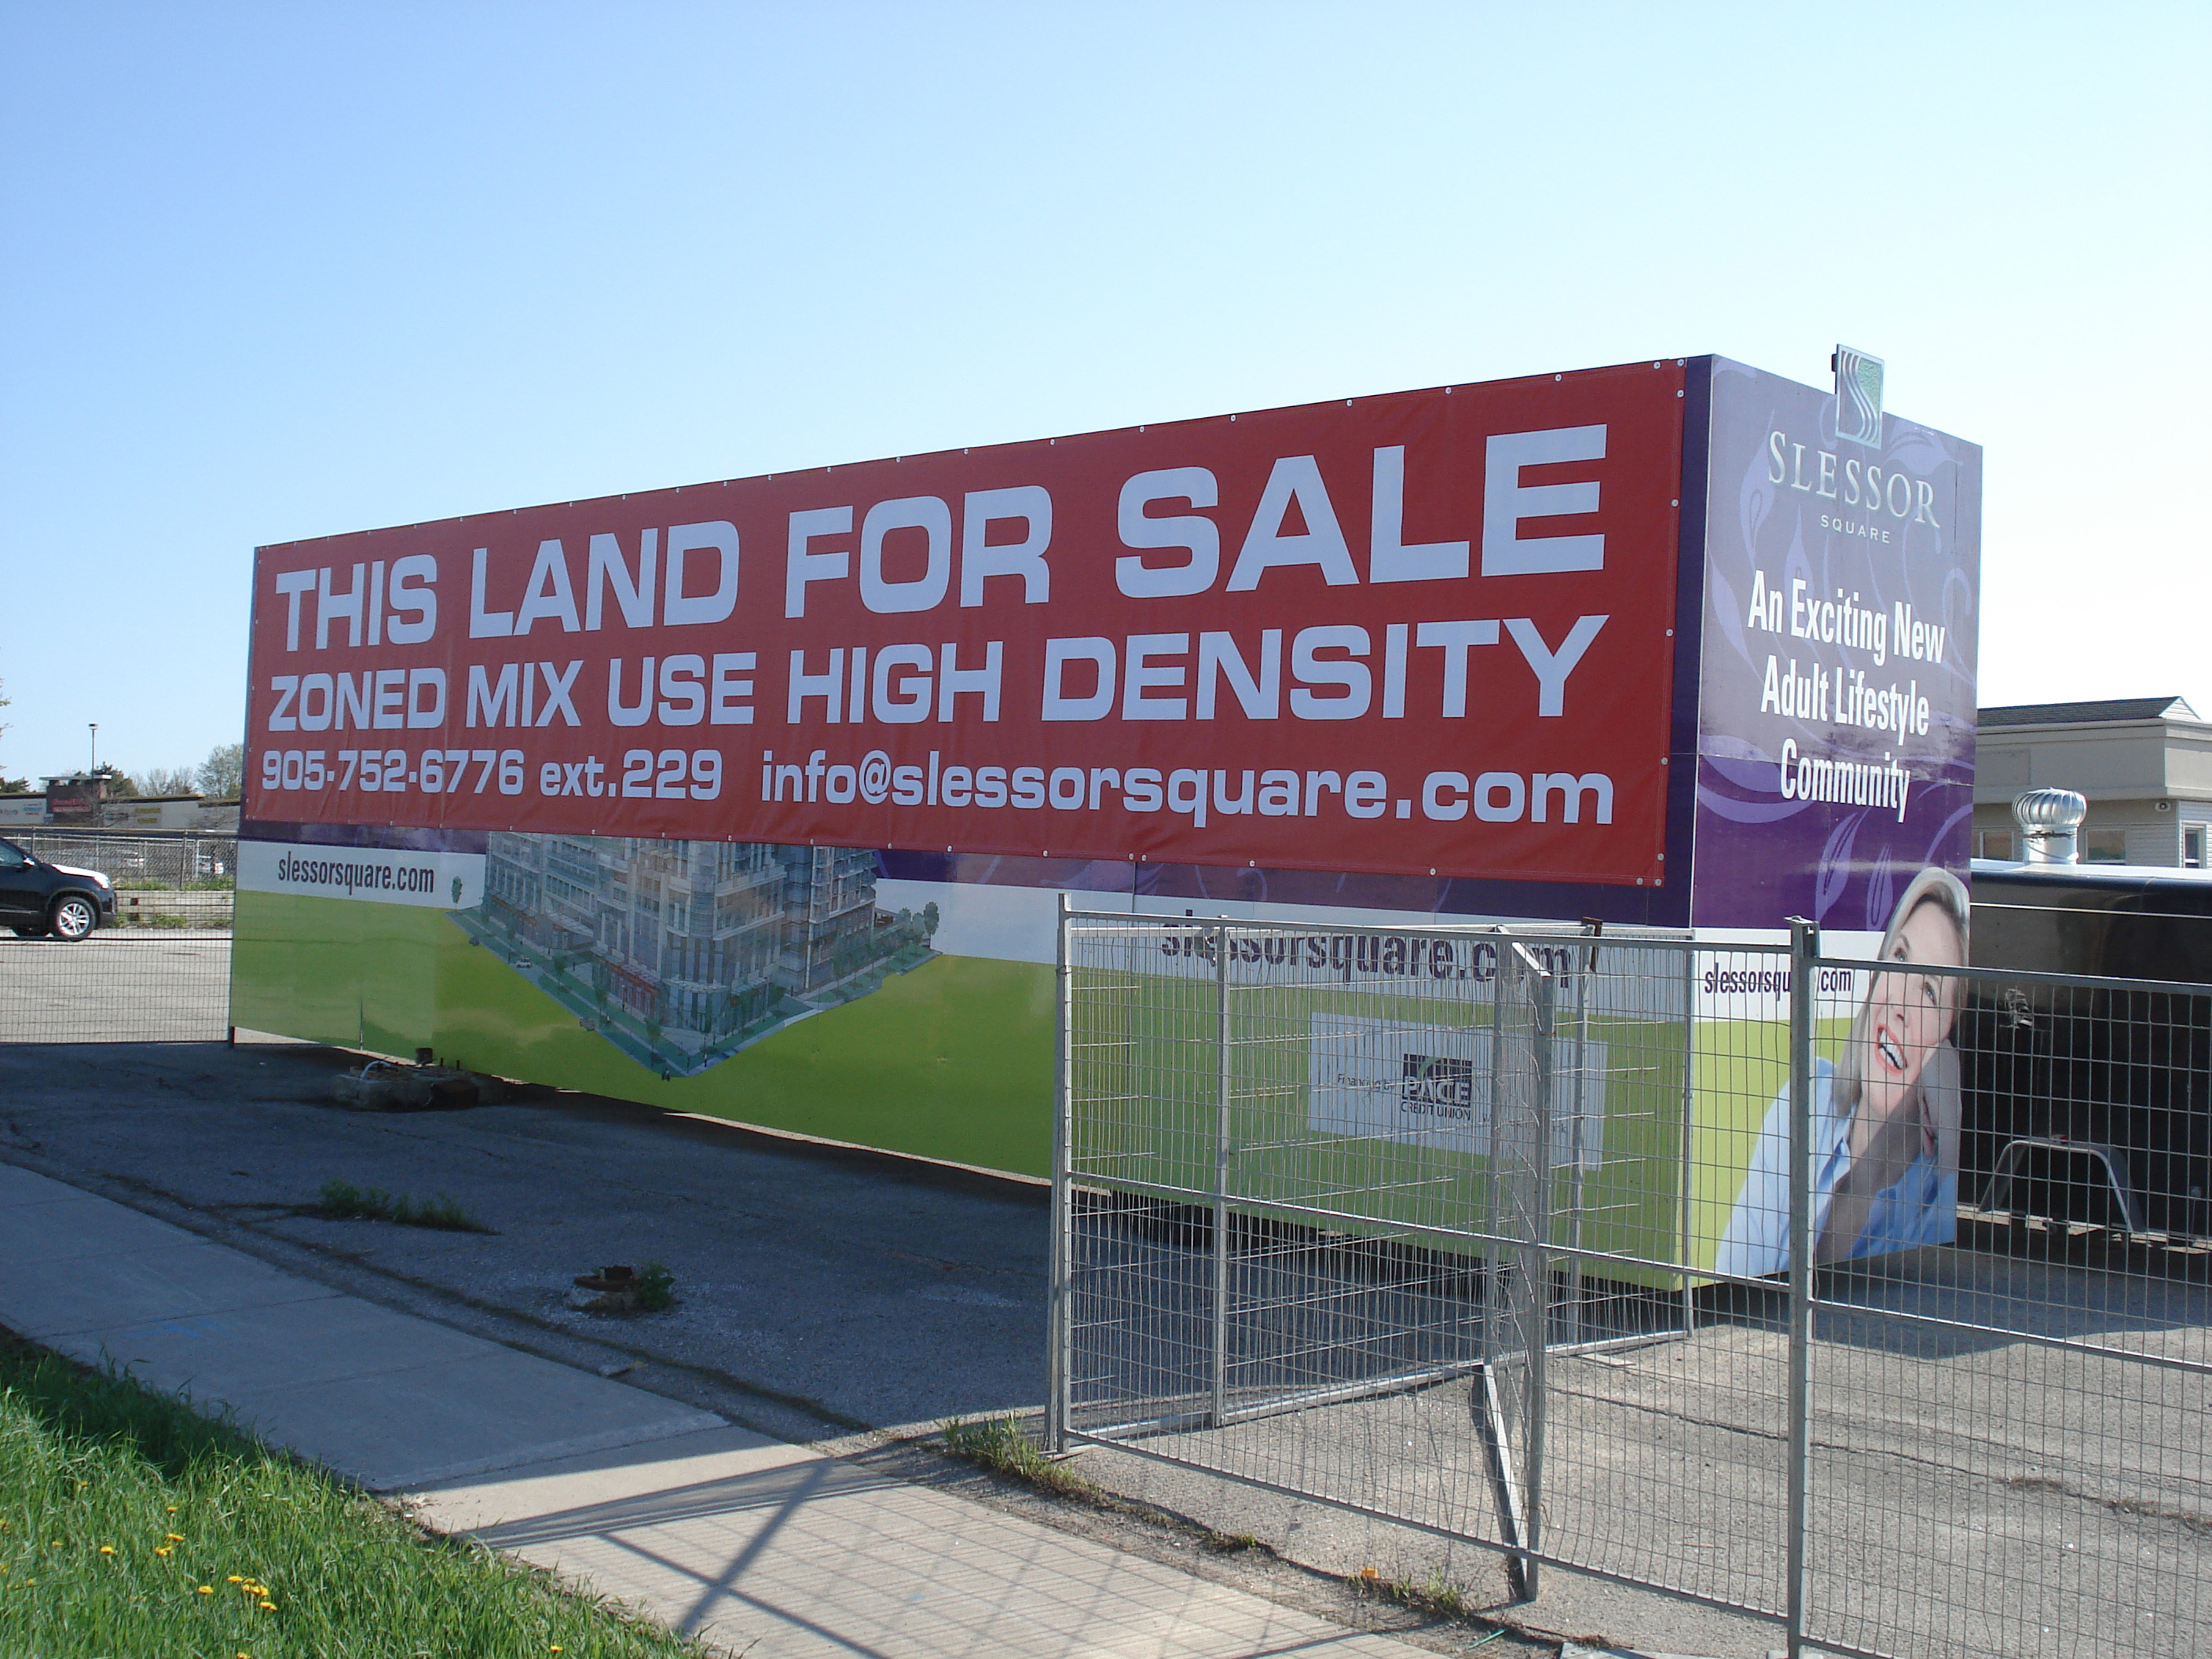 Slessor Land for Sale